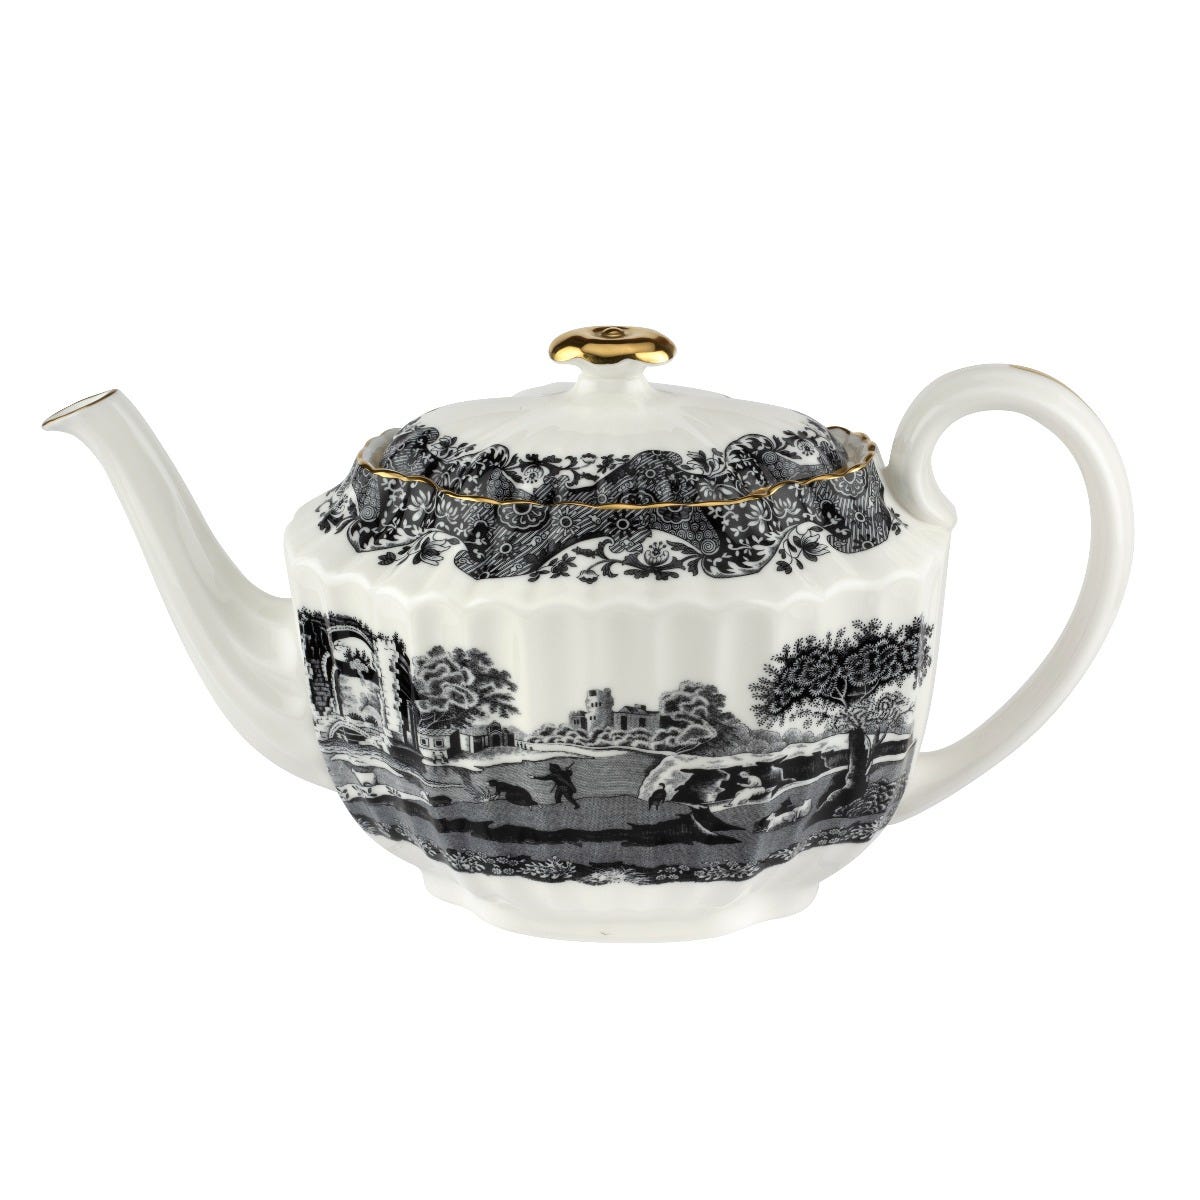 1770 Italian Teapot in Black, Large, Spode